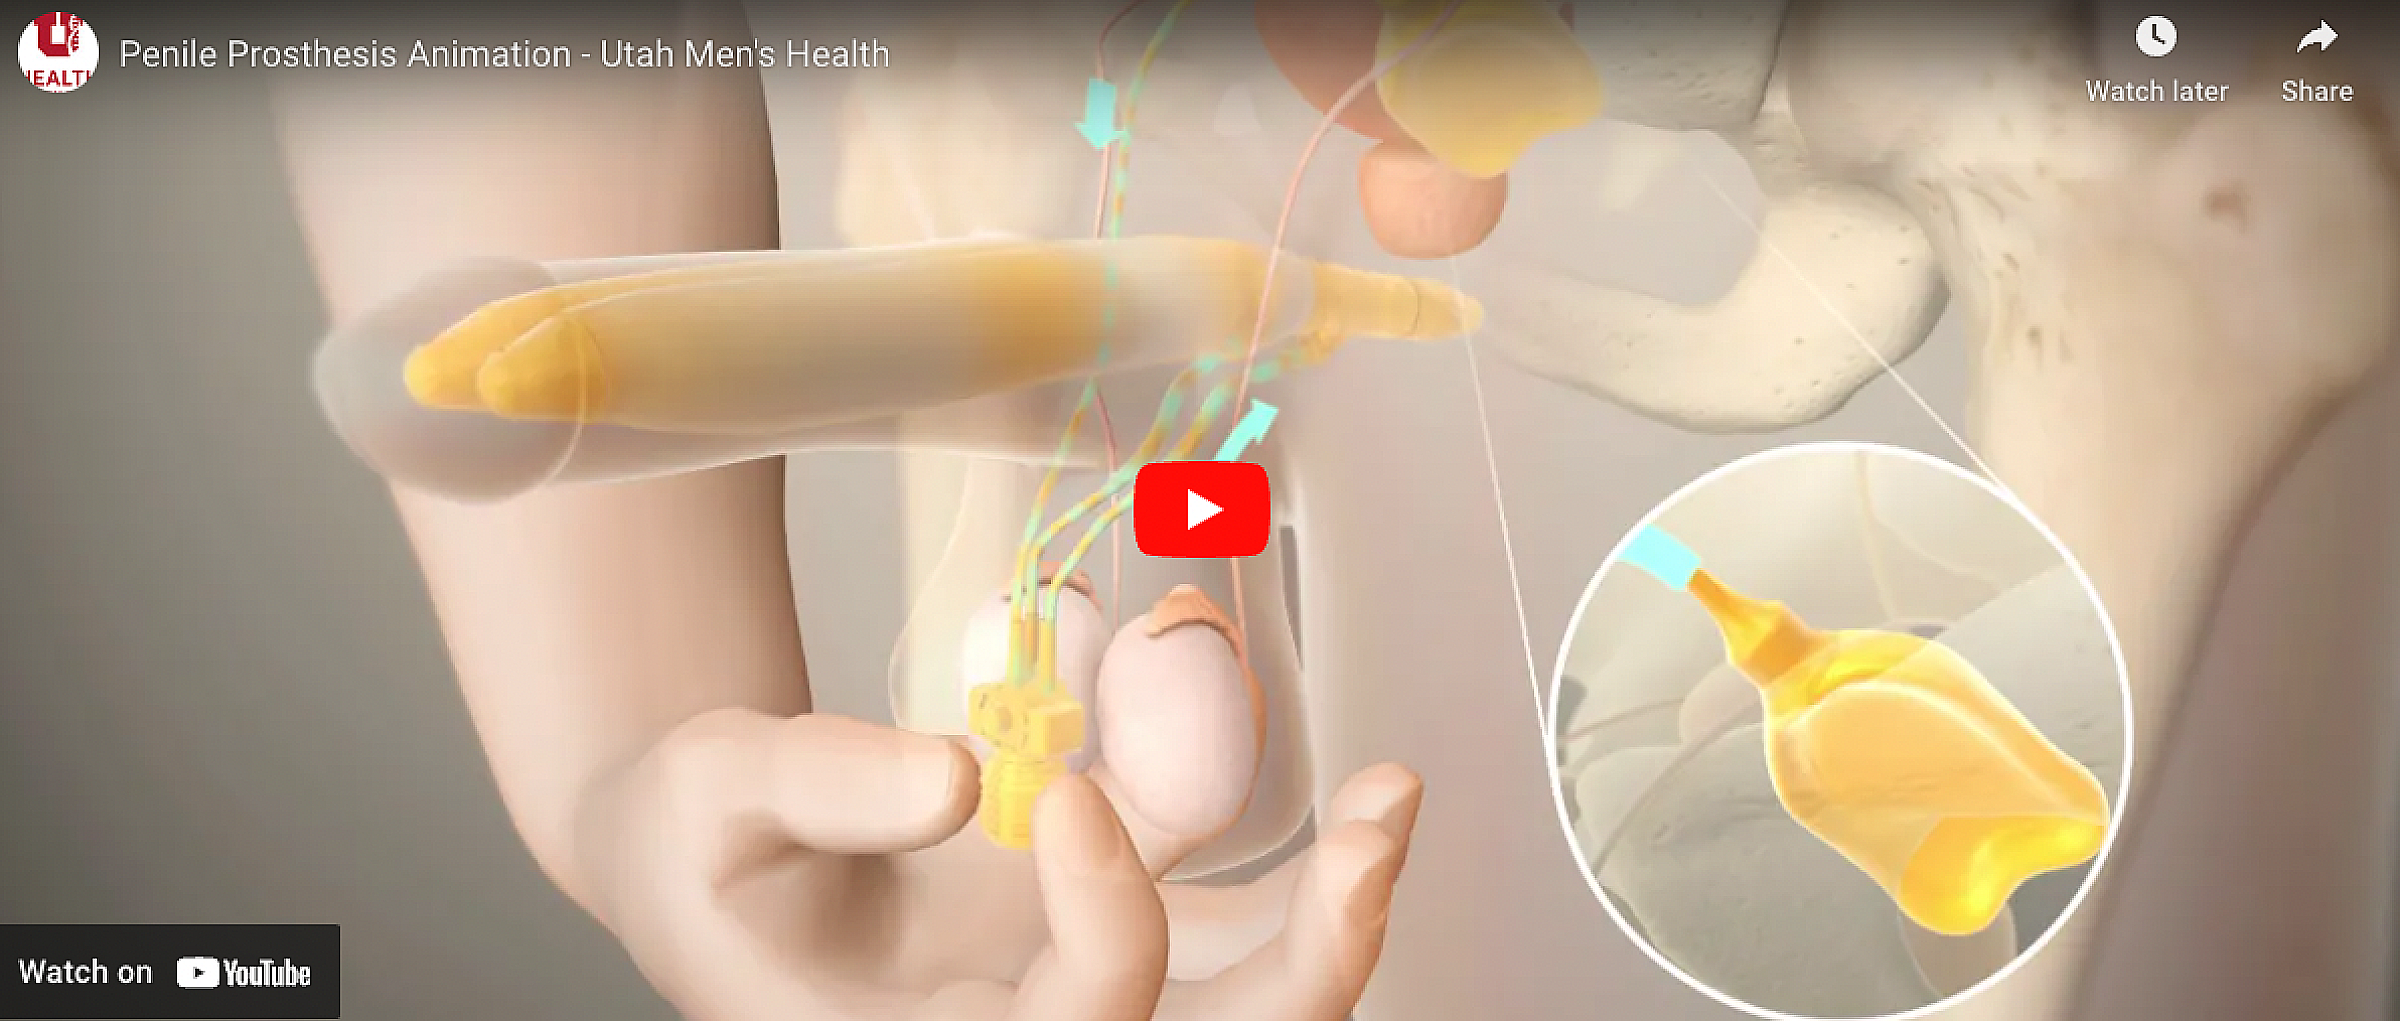 Thumbnail for Penile Prosthesis Animation Youtube Video